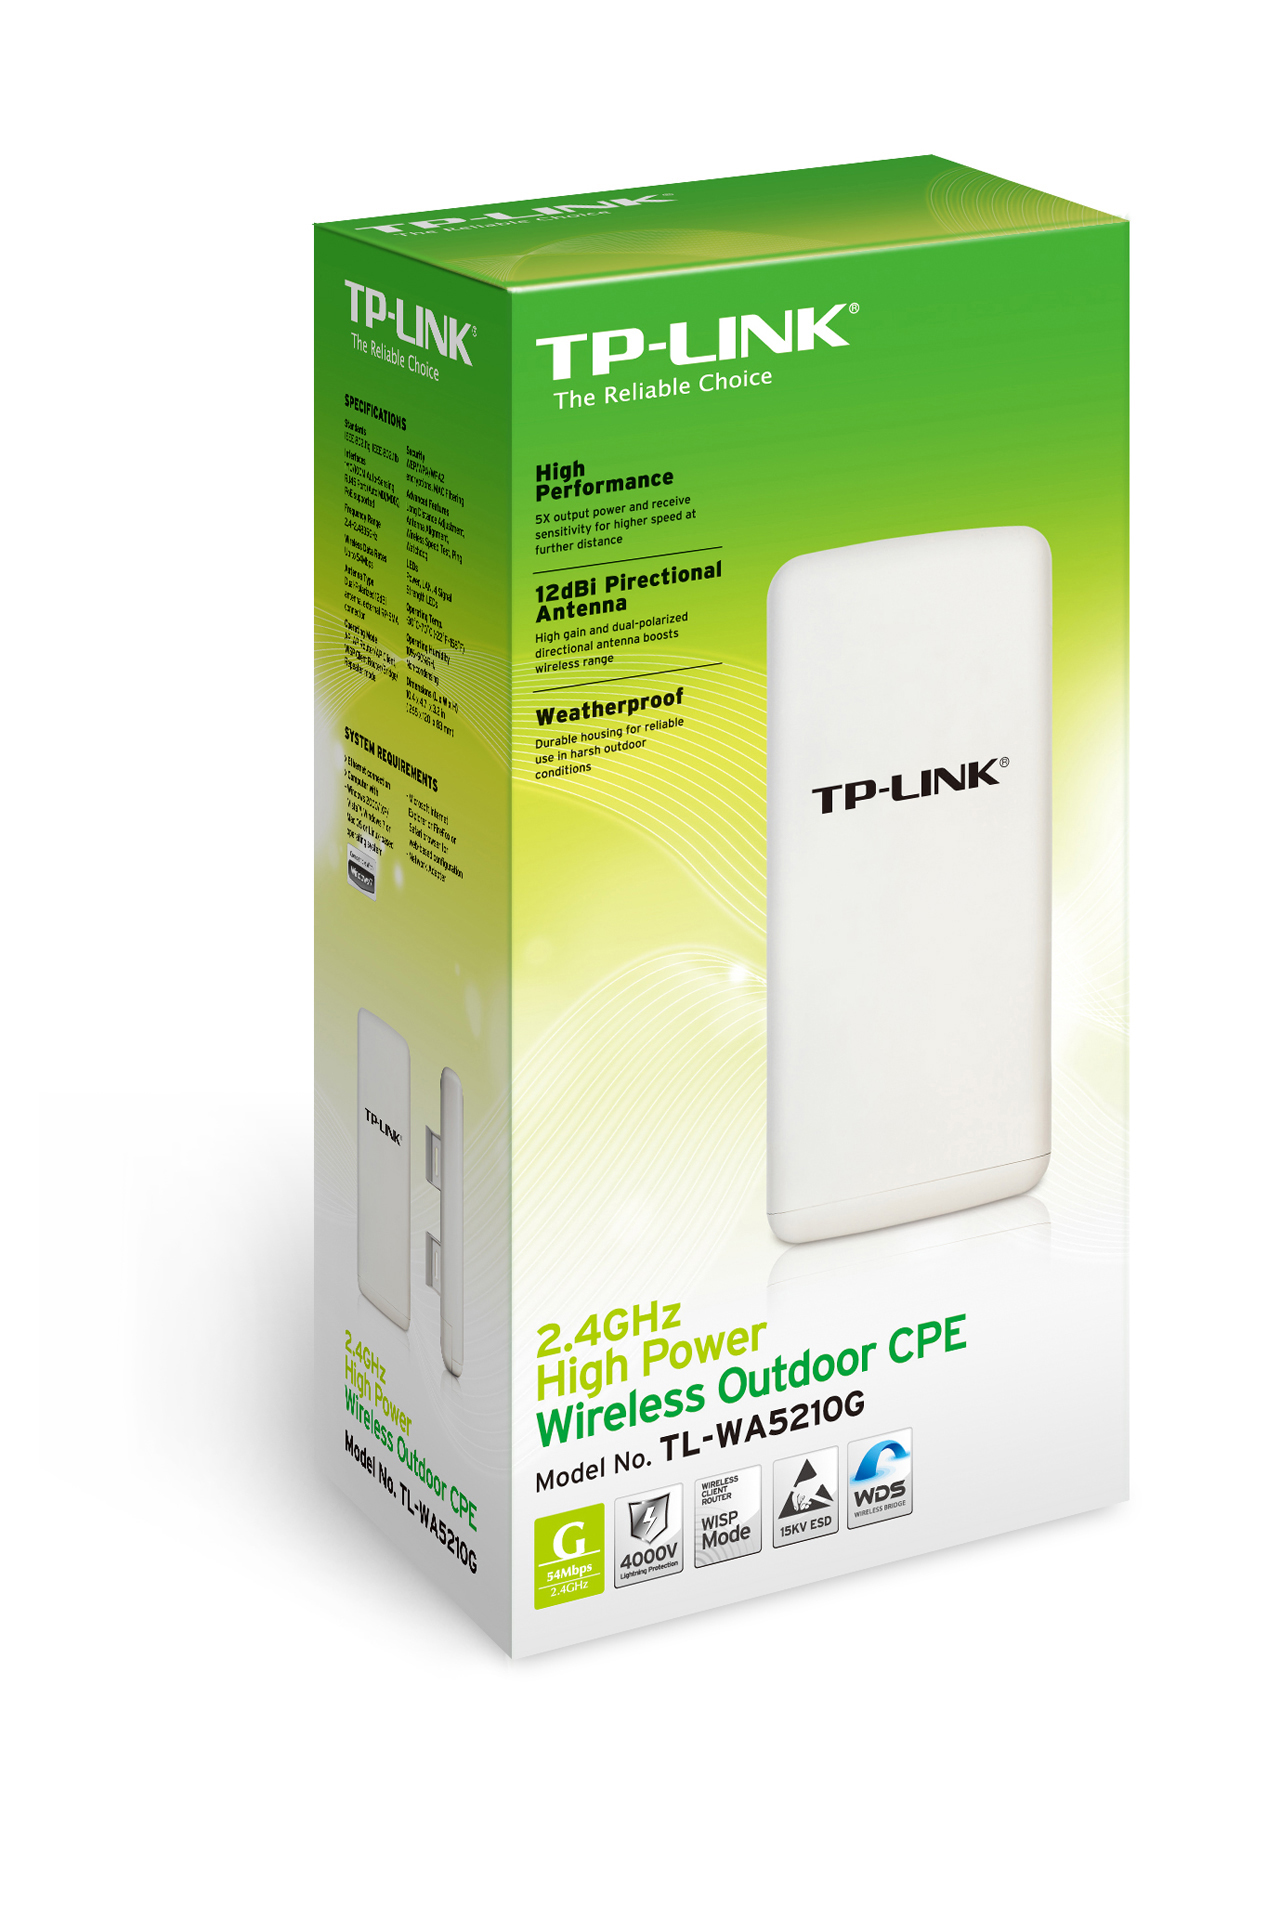 TP-LINK TL-WA5210G ALTO PODER EXTERIOR INALAMBRICO PUNTO DE ACCESSO 2.4GHZ 54 MBPS 802.11G/B 12DBI DIRECIONAL